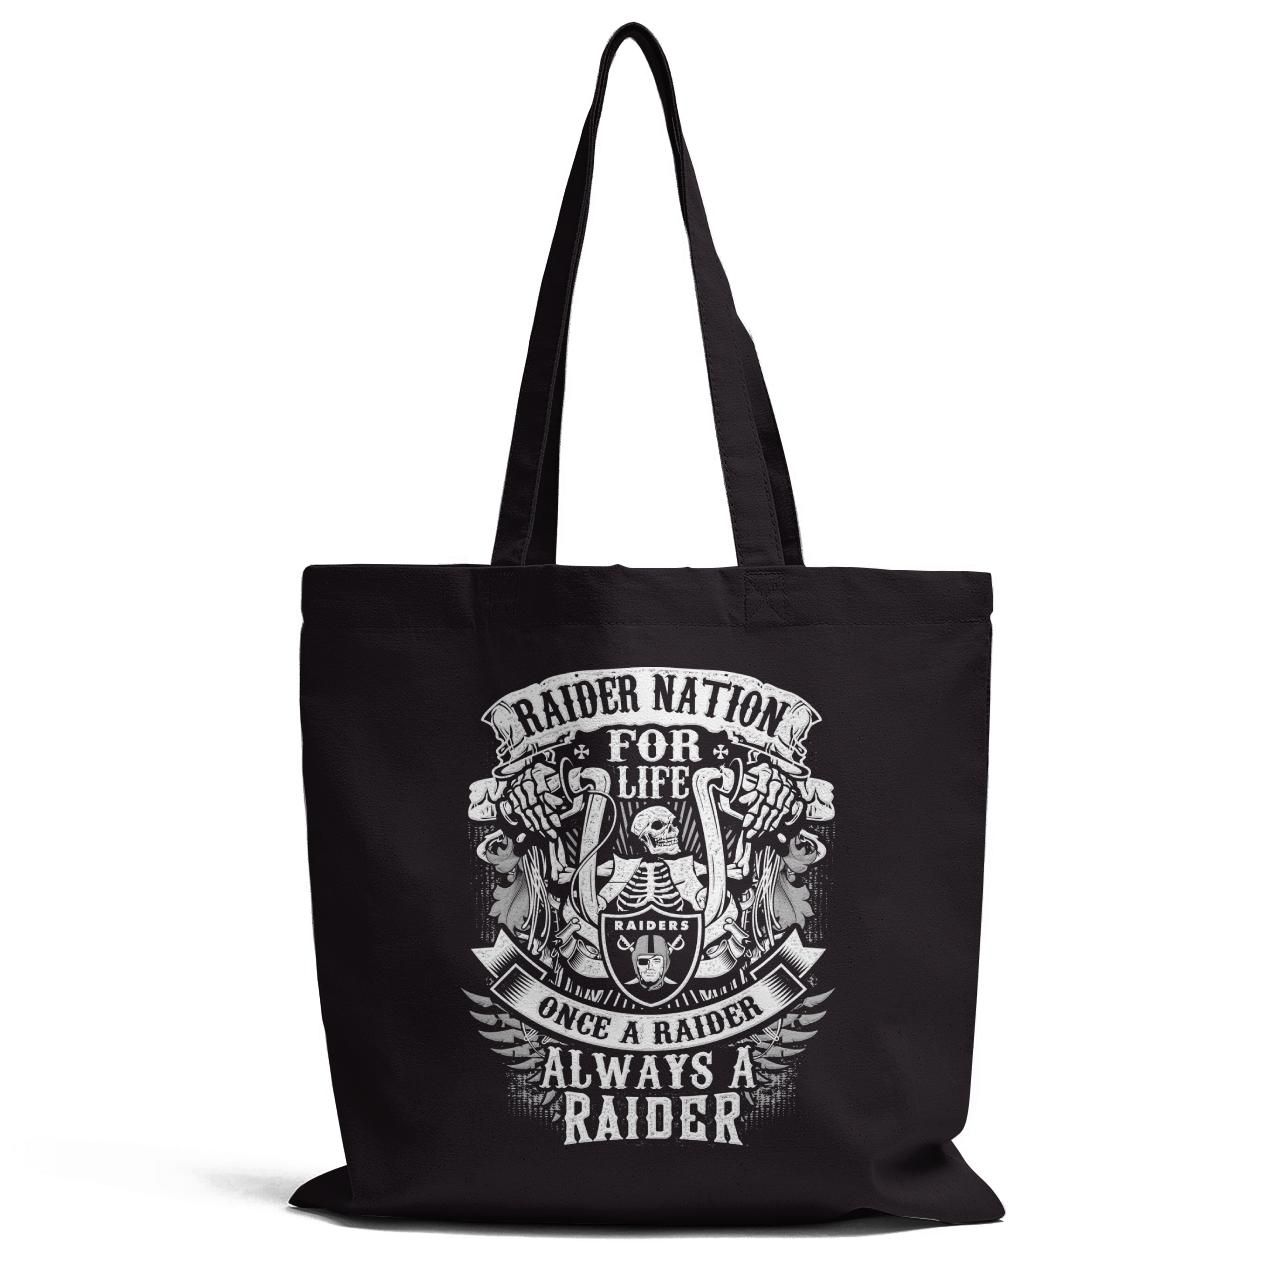 Once A Raider Always A Raider Tote Bag